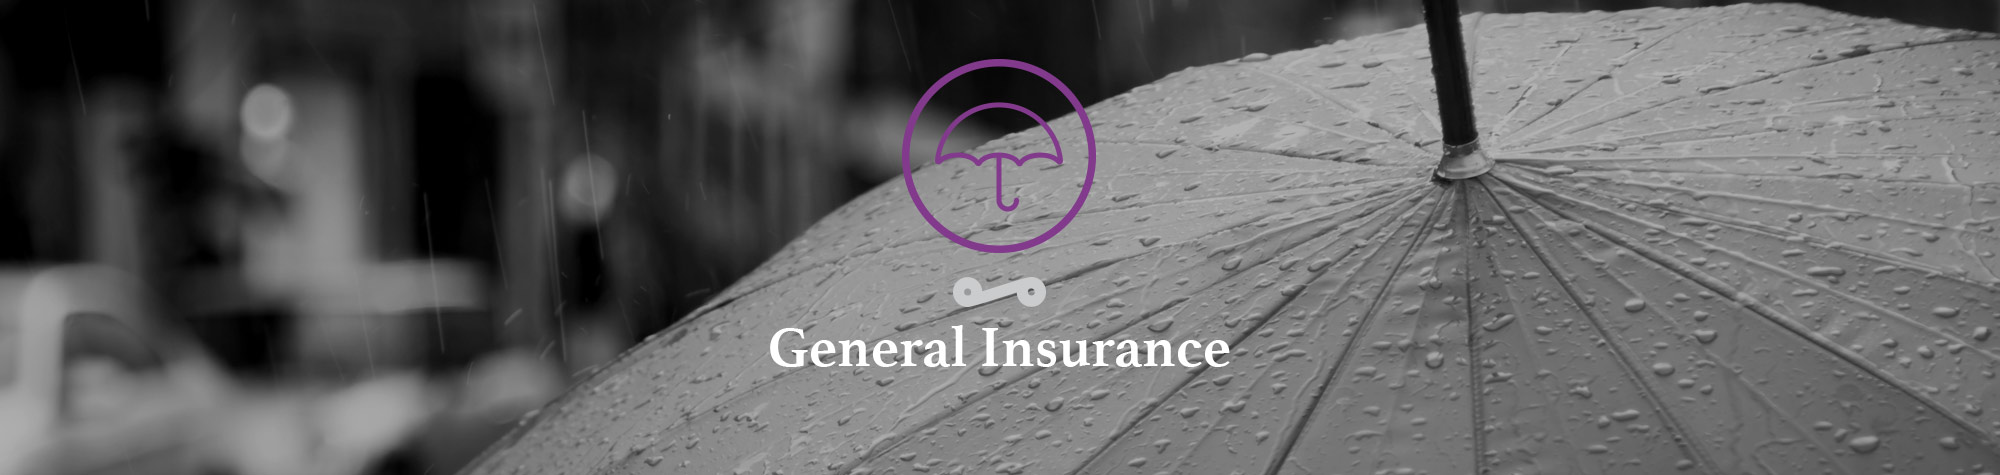 UK General insurance